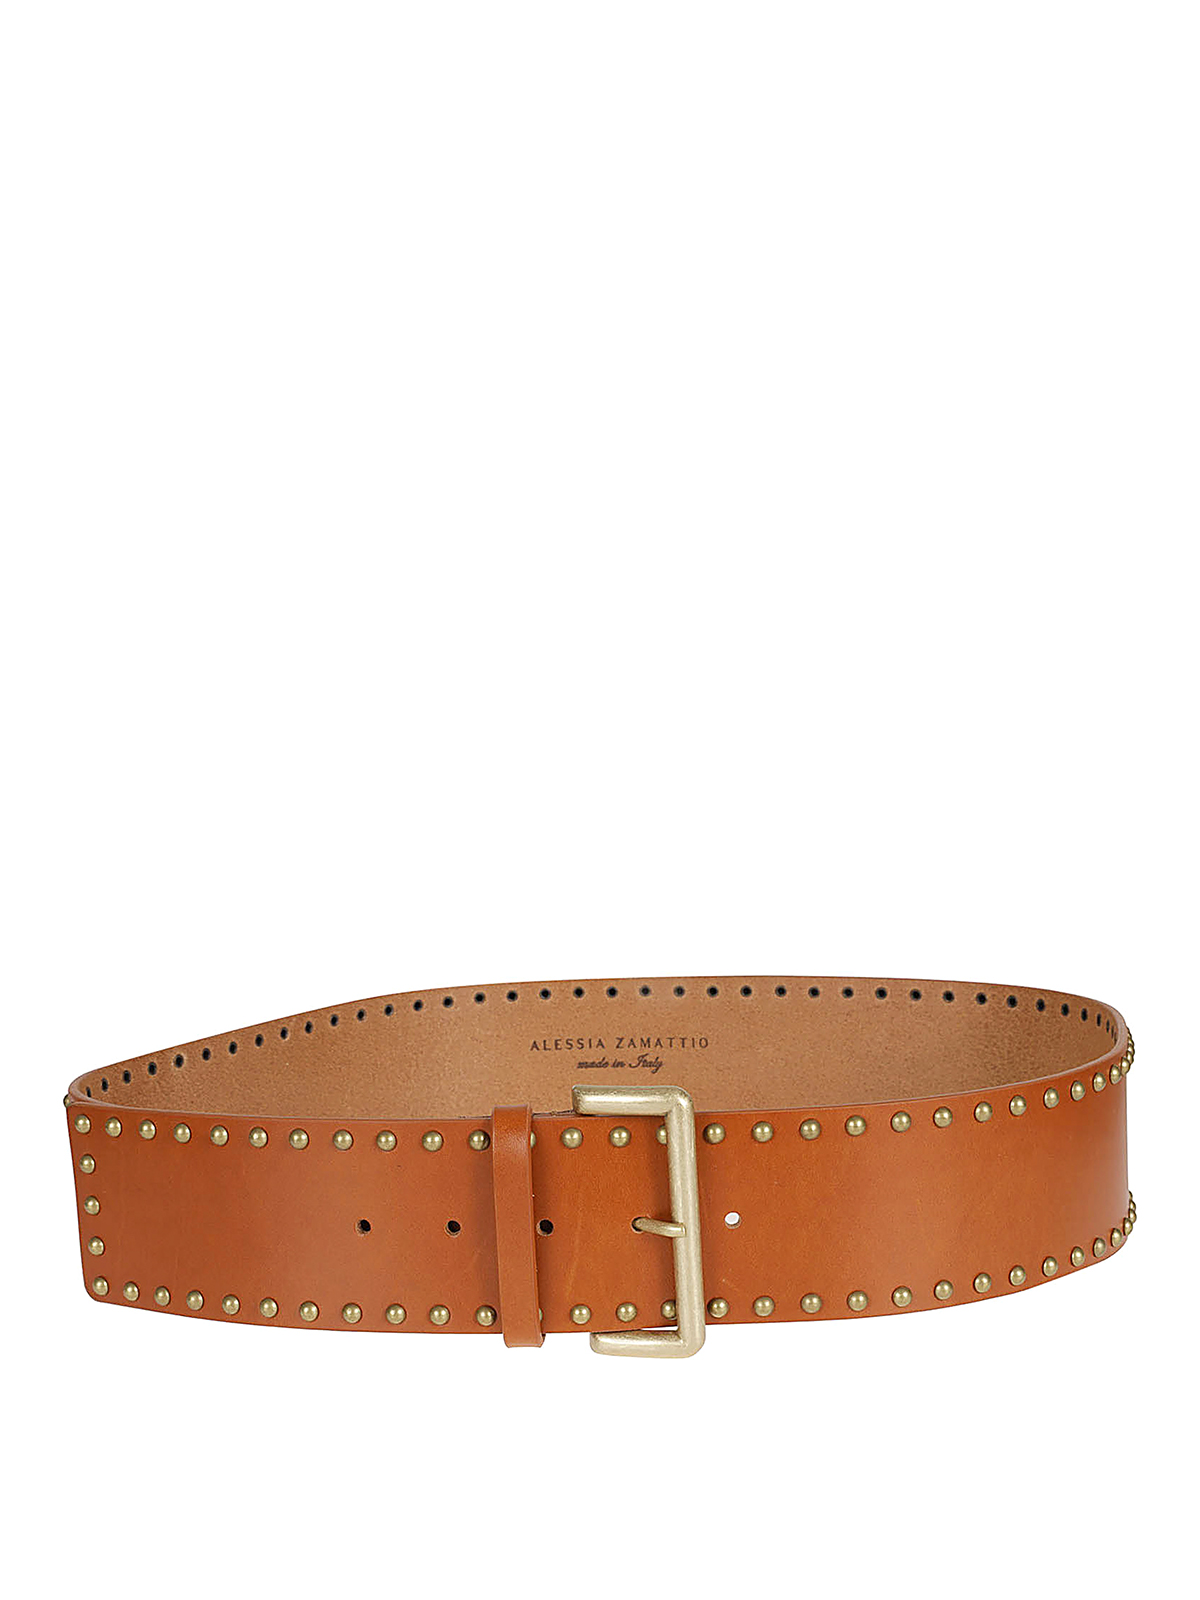 Alessia Zamattio Studded Leather Belt In Brown